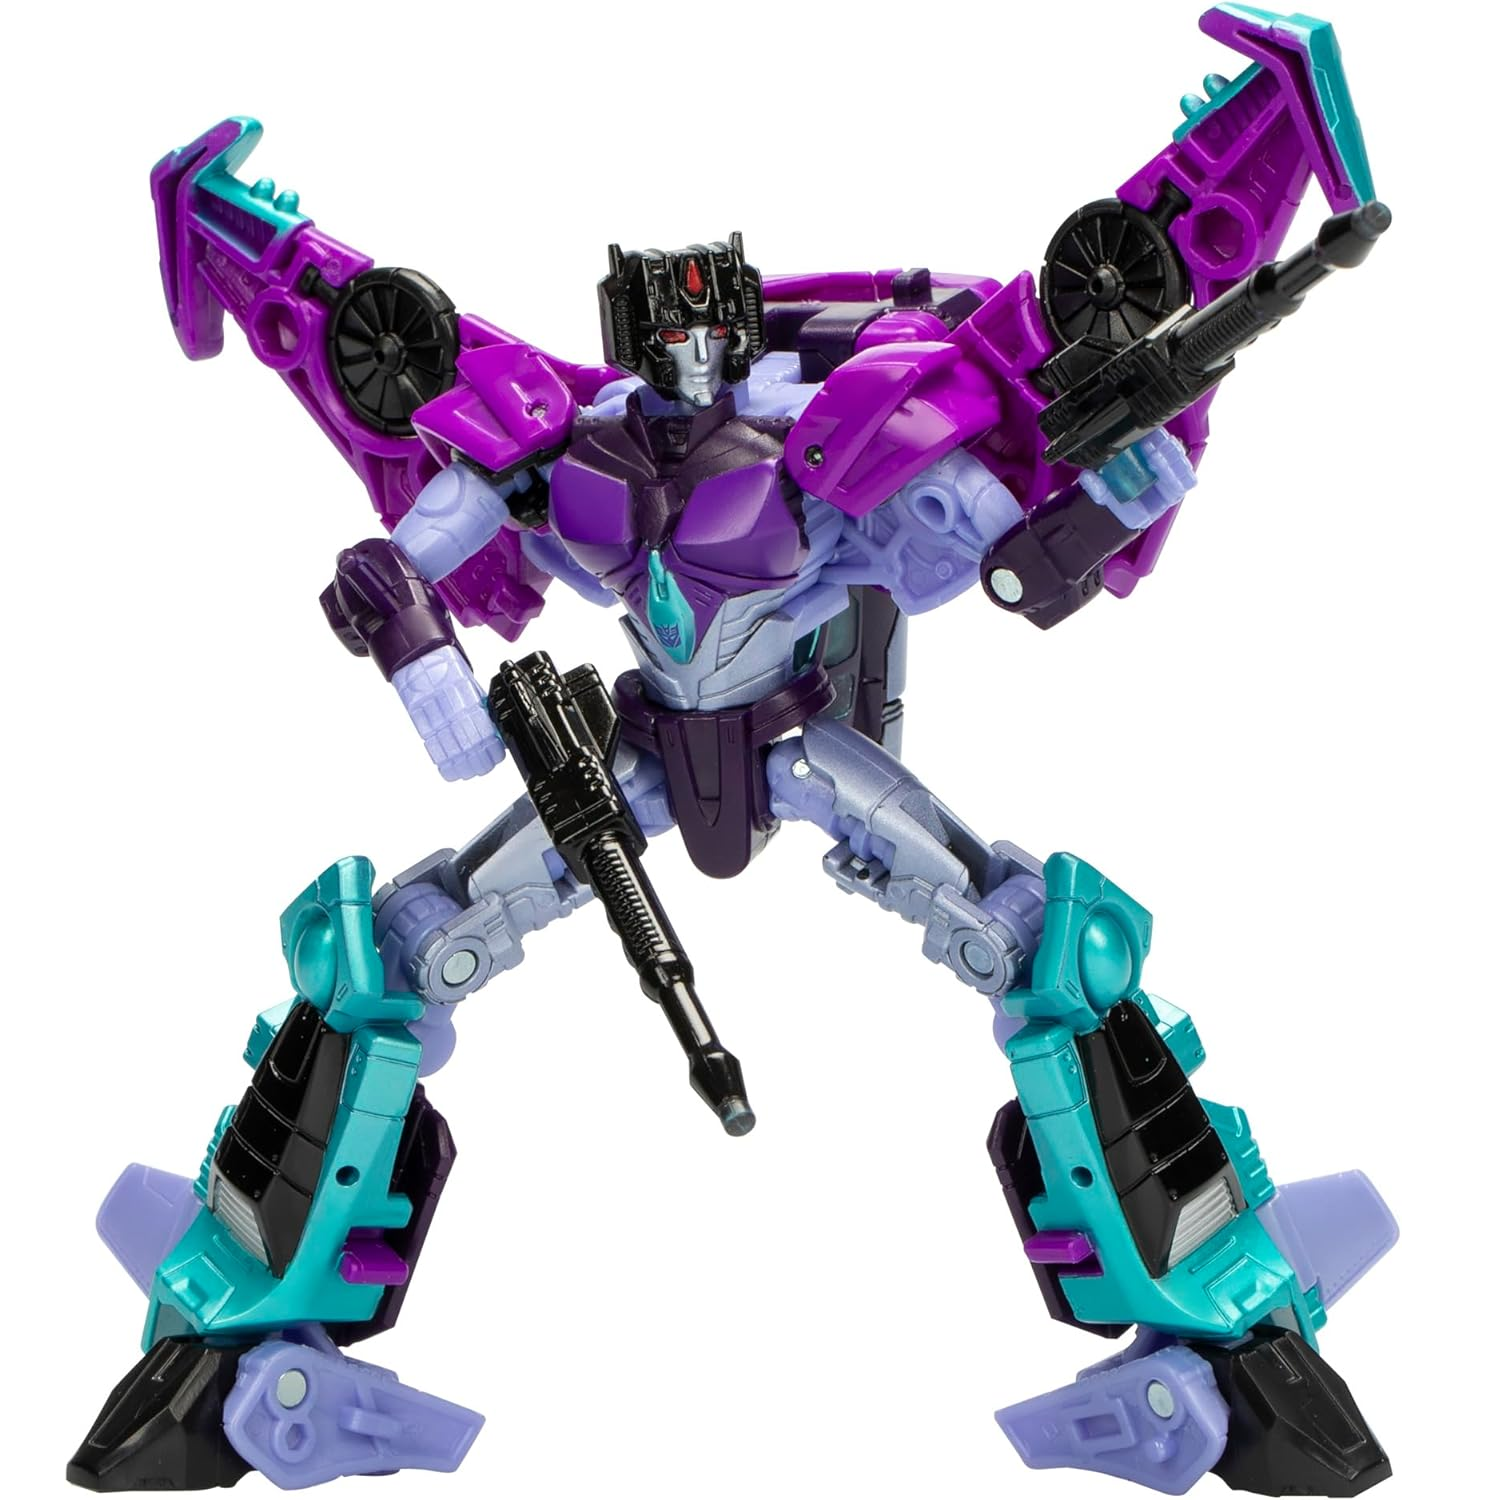 Hasbro Transformers Deluxe Class Slipstream